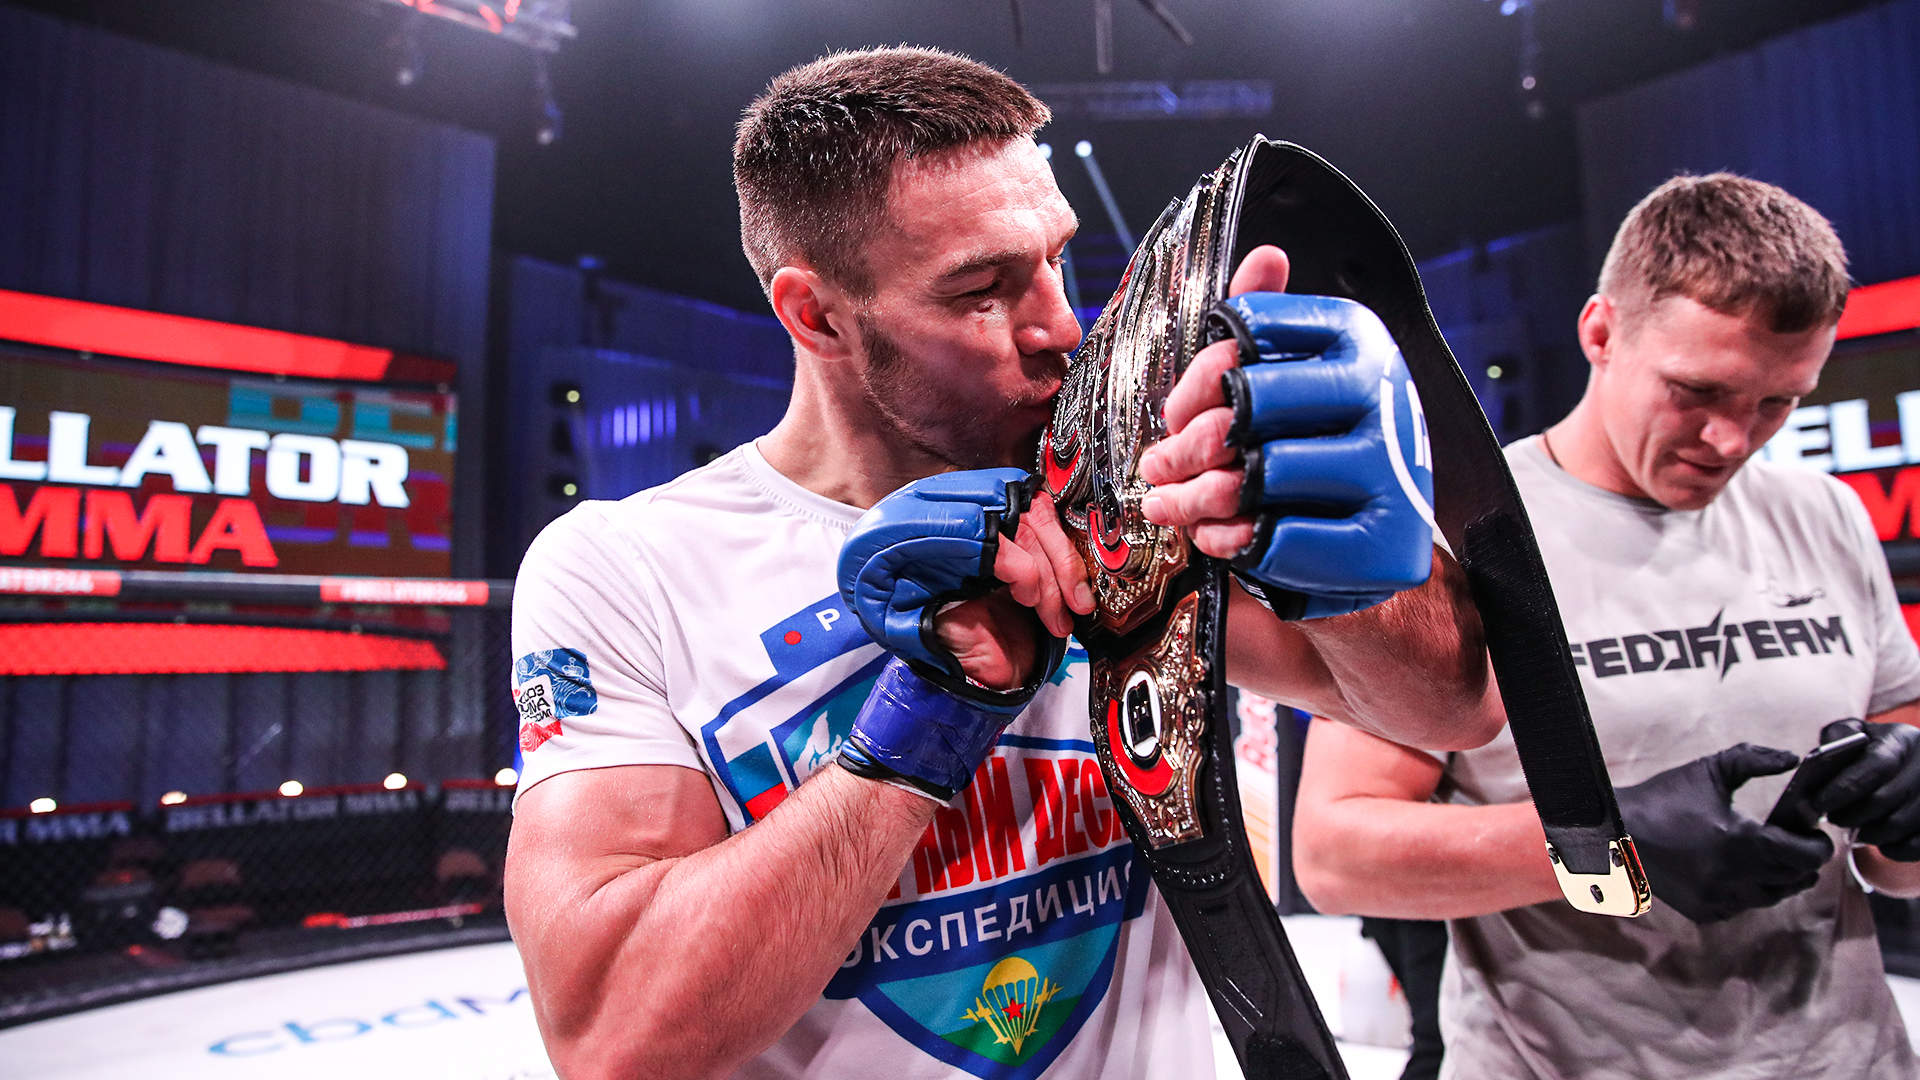 Bellator Champion Nemkov: If I Go to UFC, I'd Rather Fight at Heavyweight